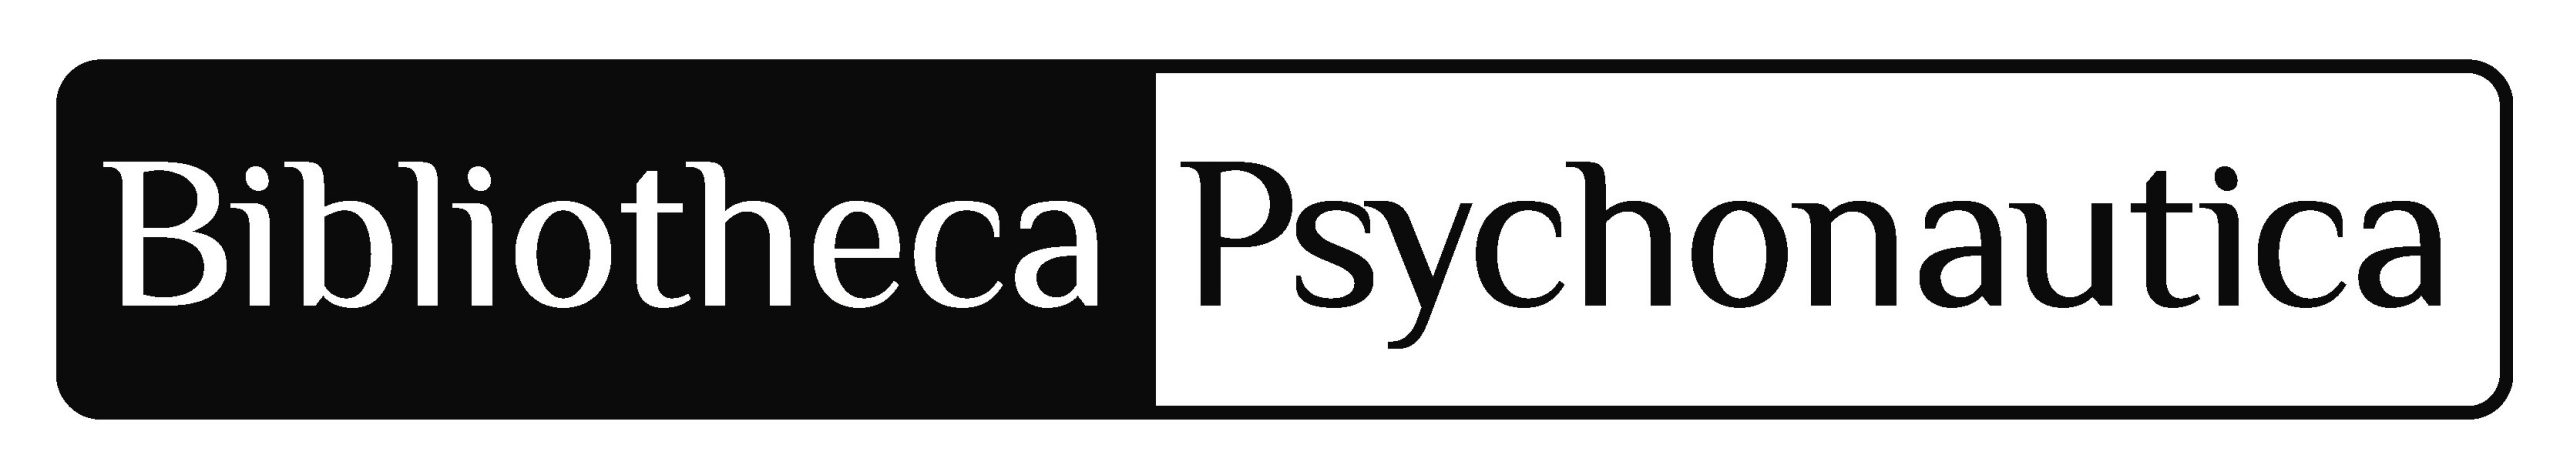 logo_bibliotheca_psychonautica